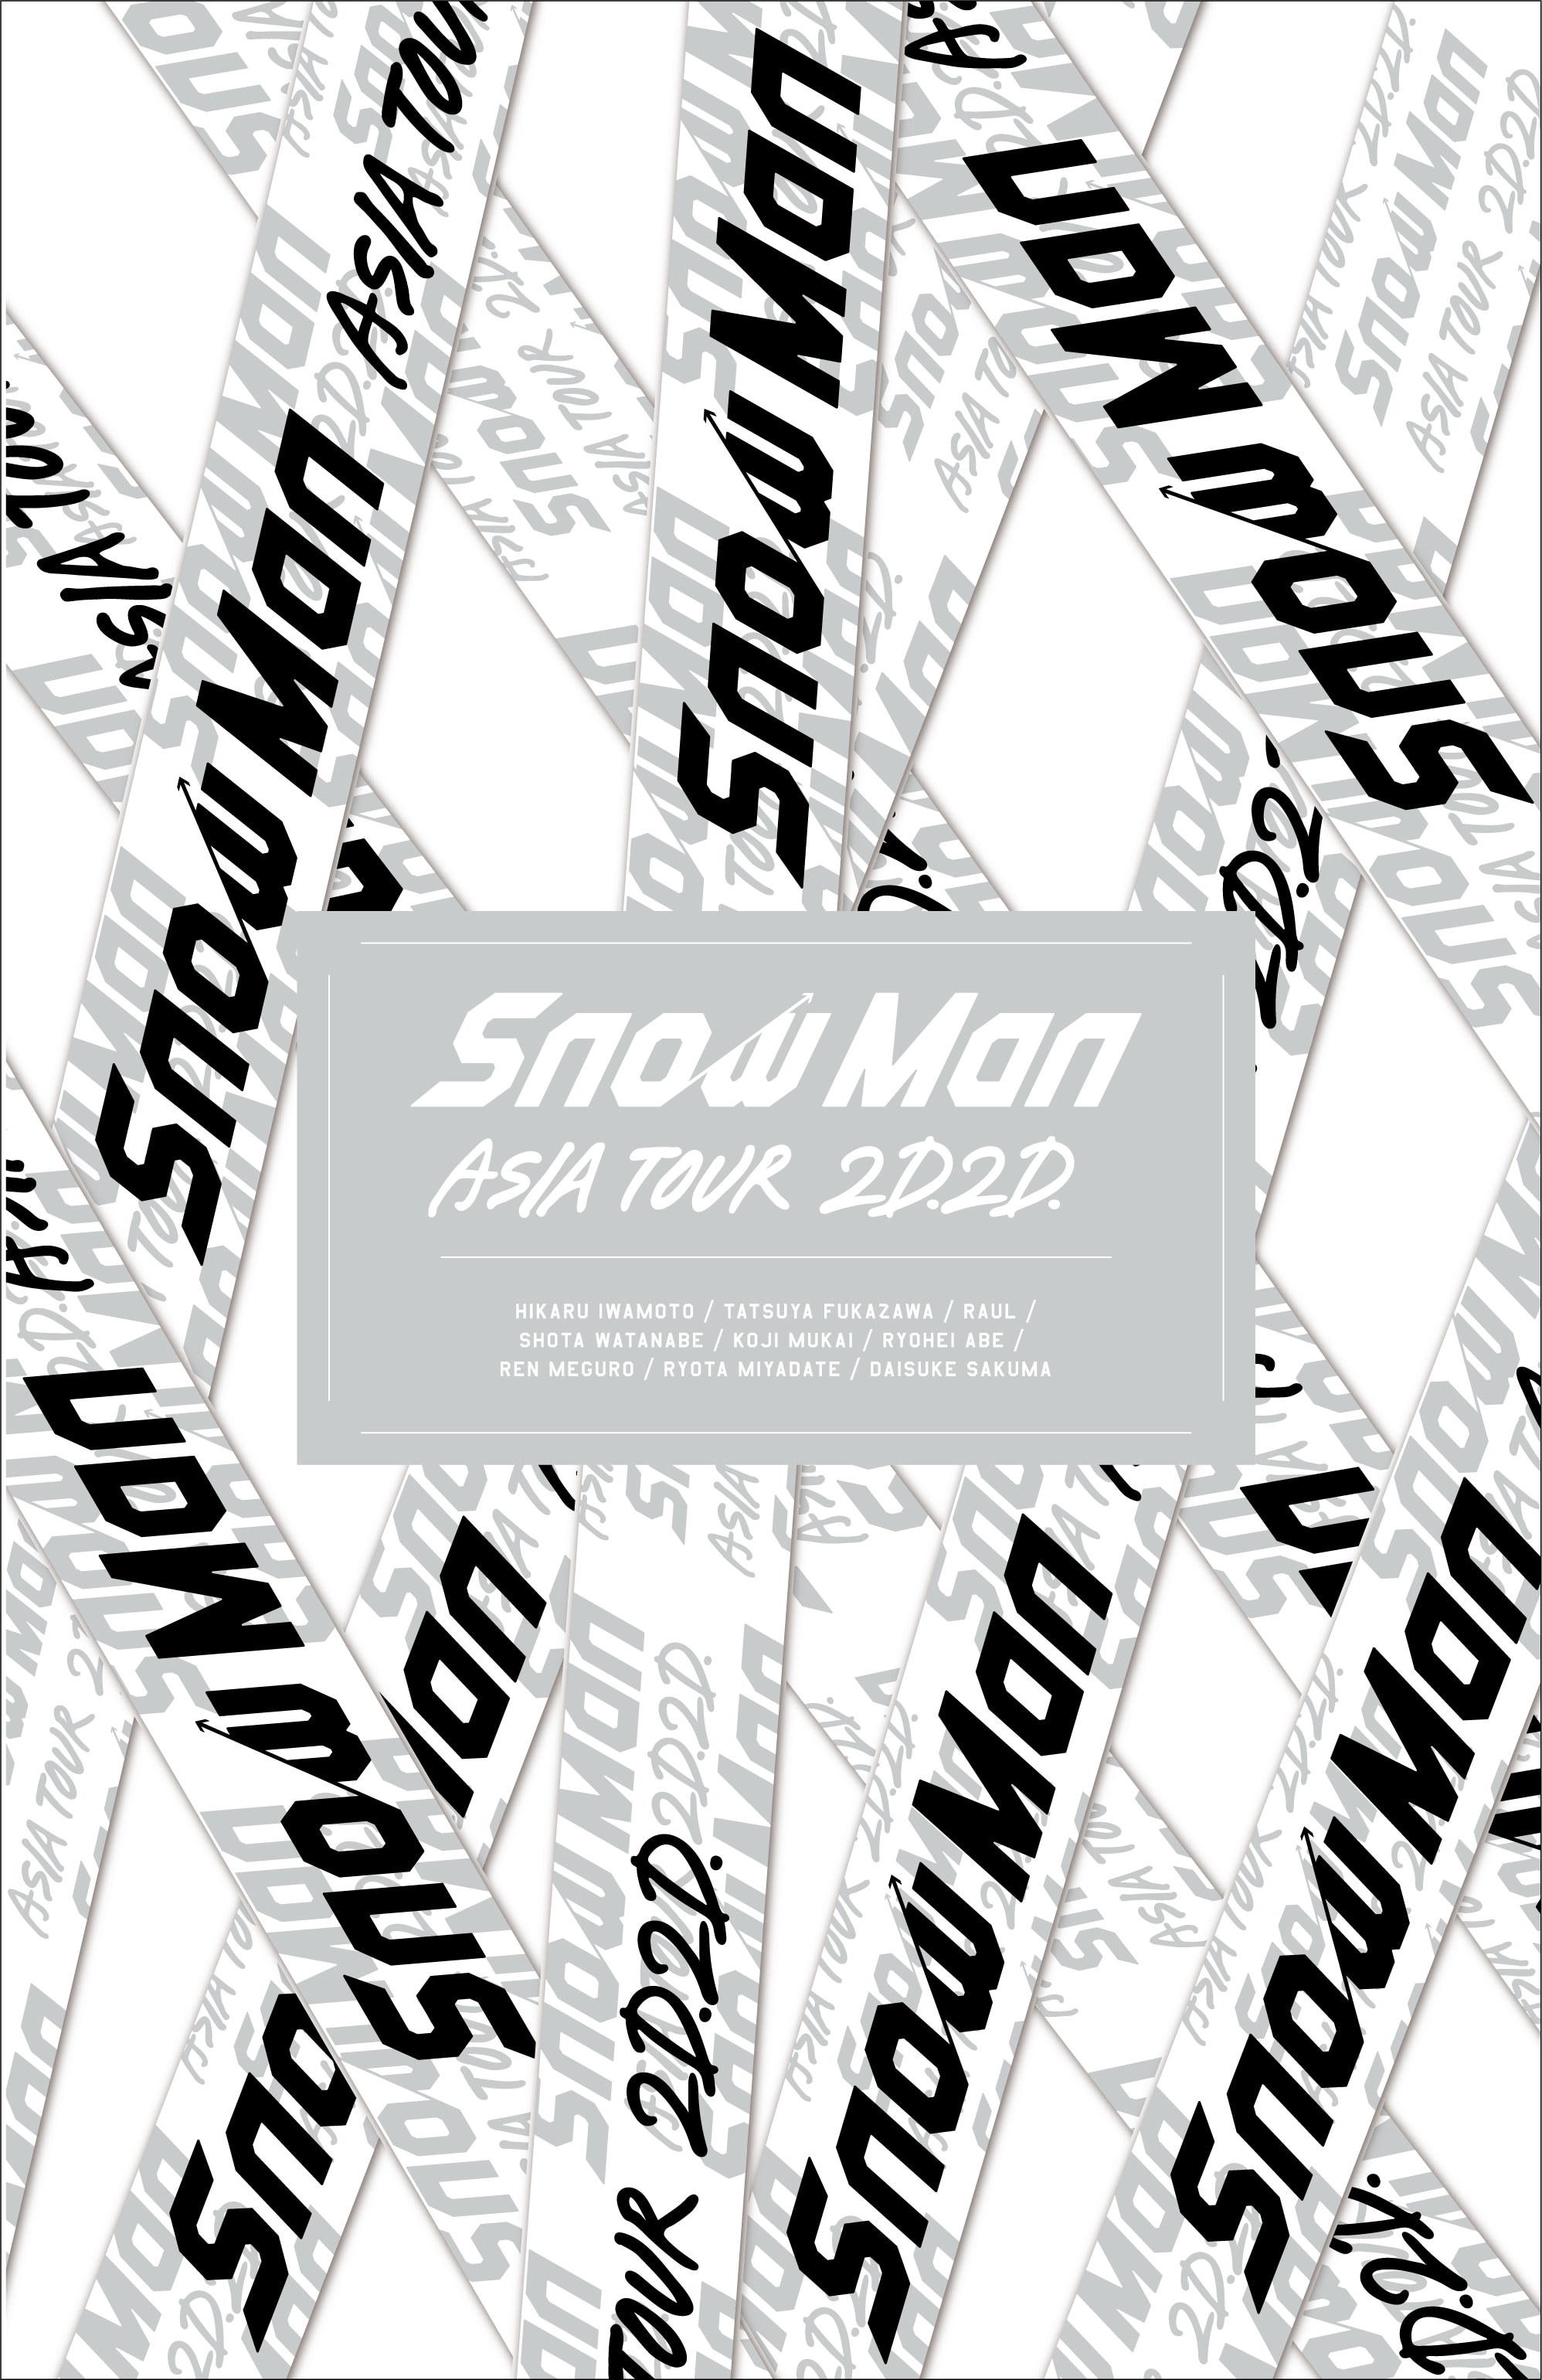 Snow Man ASIA TOUR 2D.2D. 初回盤 Blu-ray